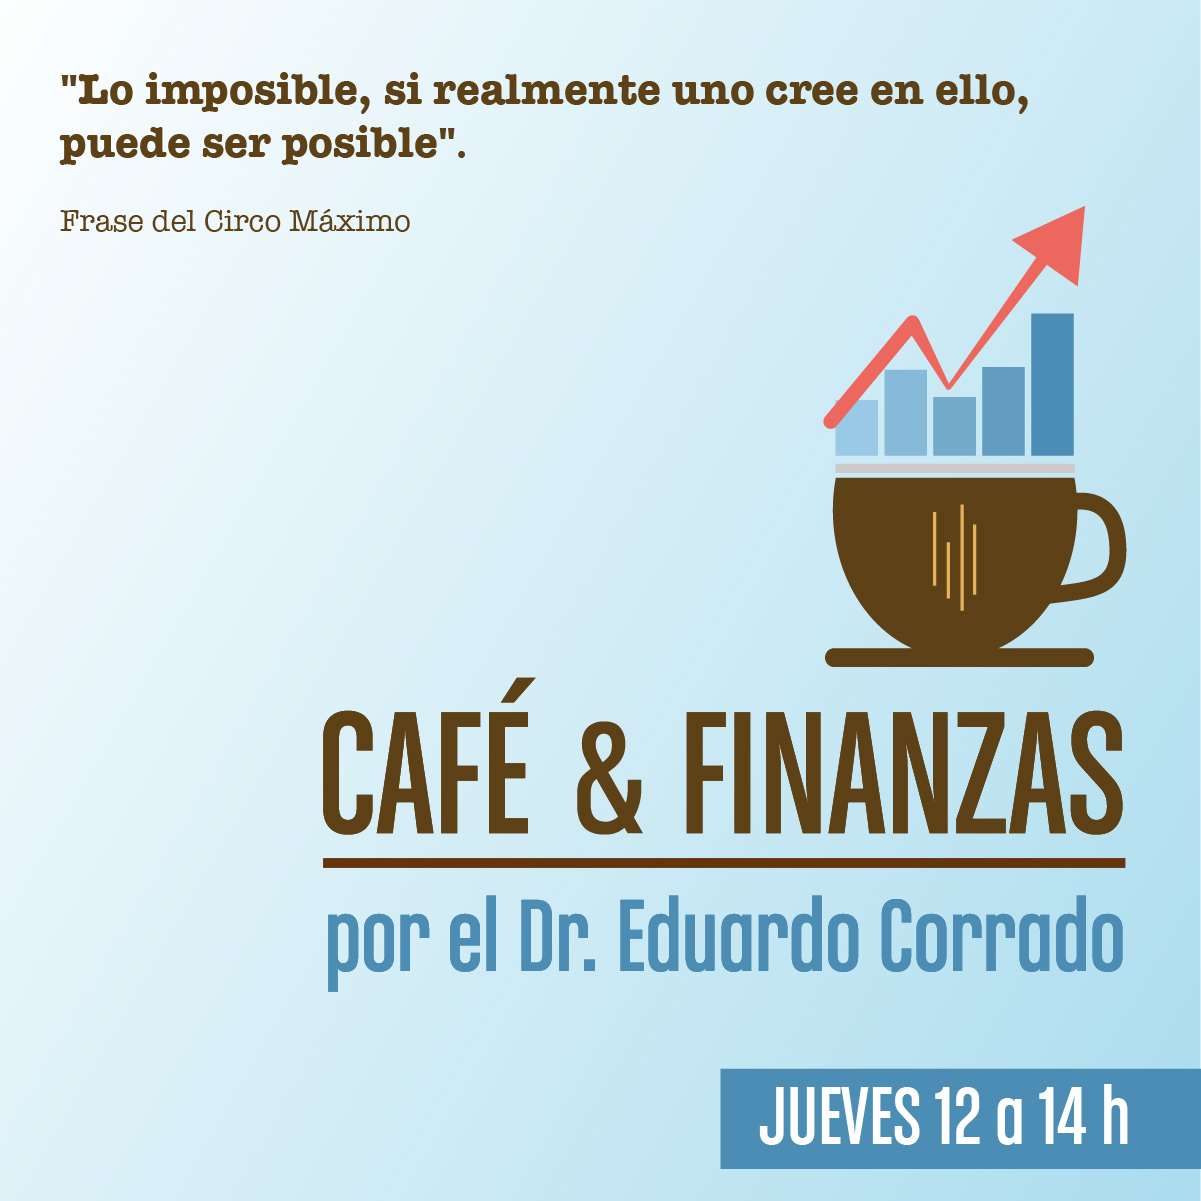 #Podcast Café & Finanzas 10.05: @pmalnati Jomsalva SA; #NetWorking @BazanJuan A.Jatar @JuanchoNuti